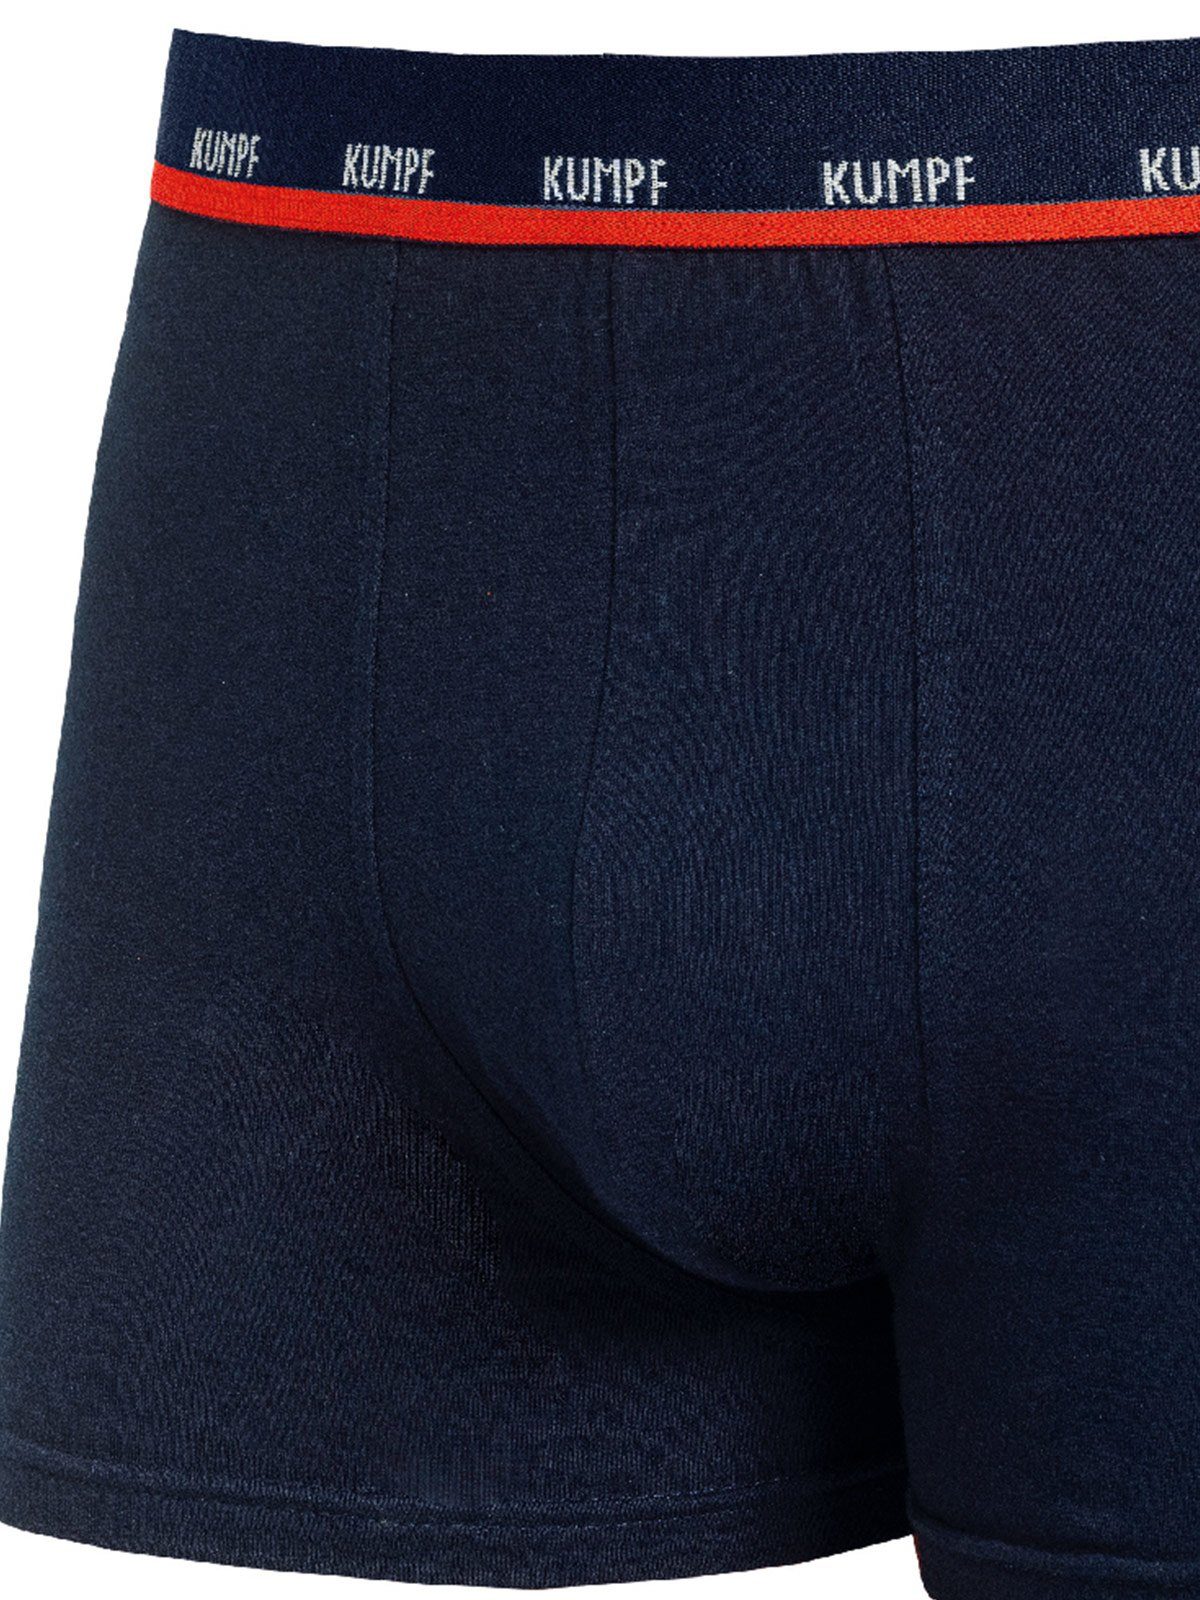 Gummibund mit KUMPF Pants 3er Retro Materialmix Herren Pack Cotton 3-St) navy Pants Stretch (Packung,